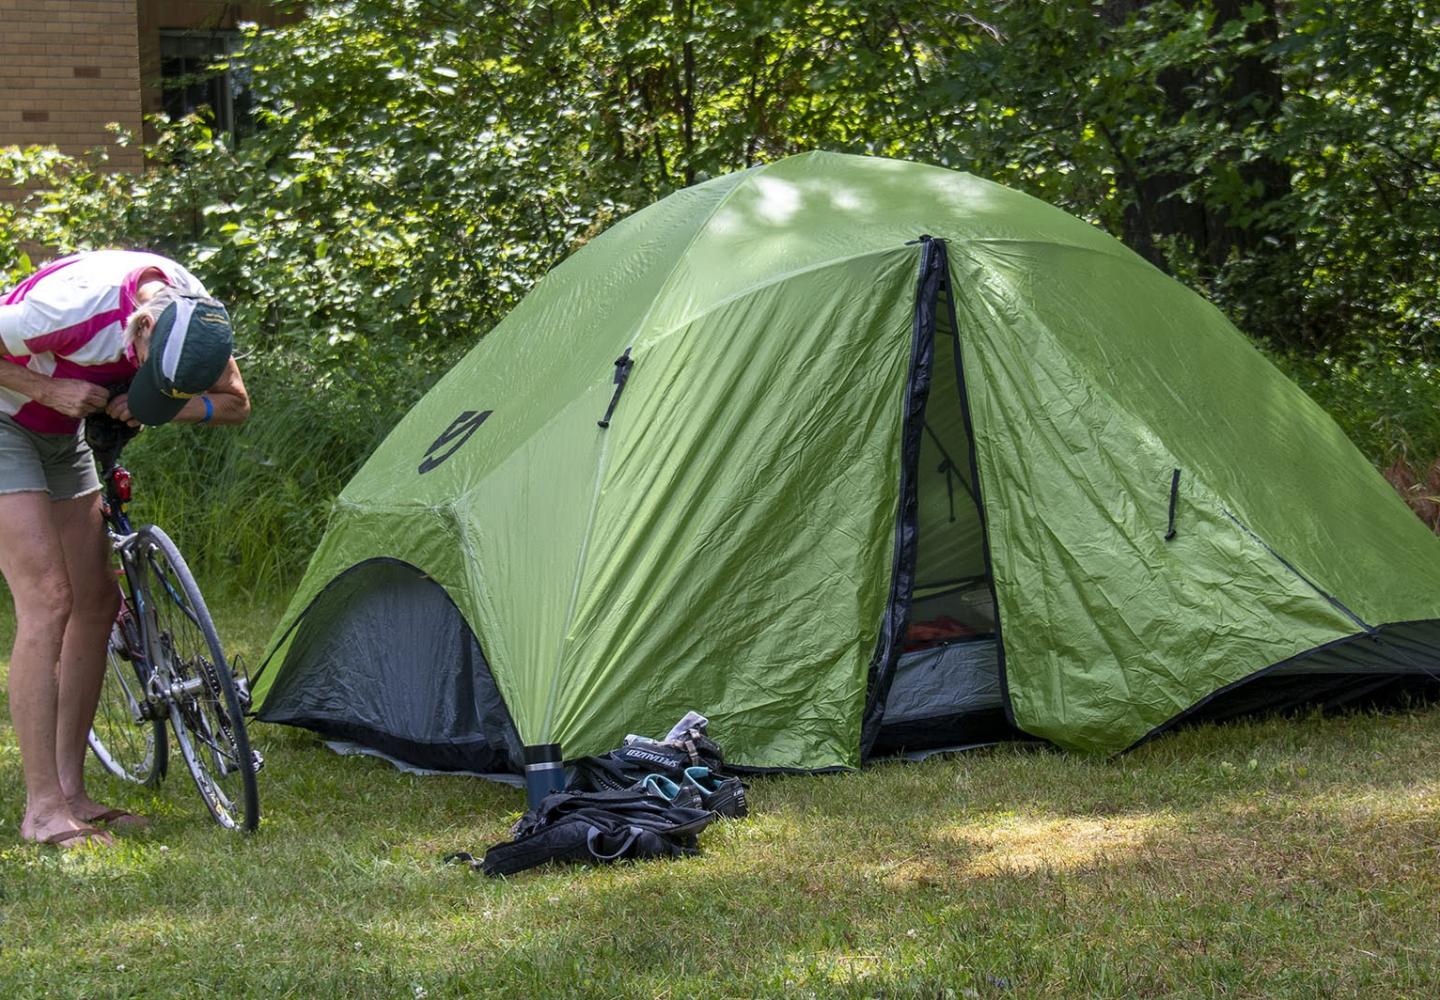 Camping? You bet. 